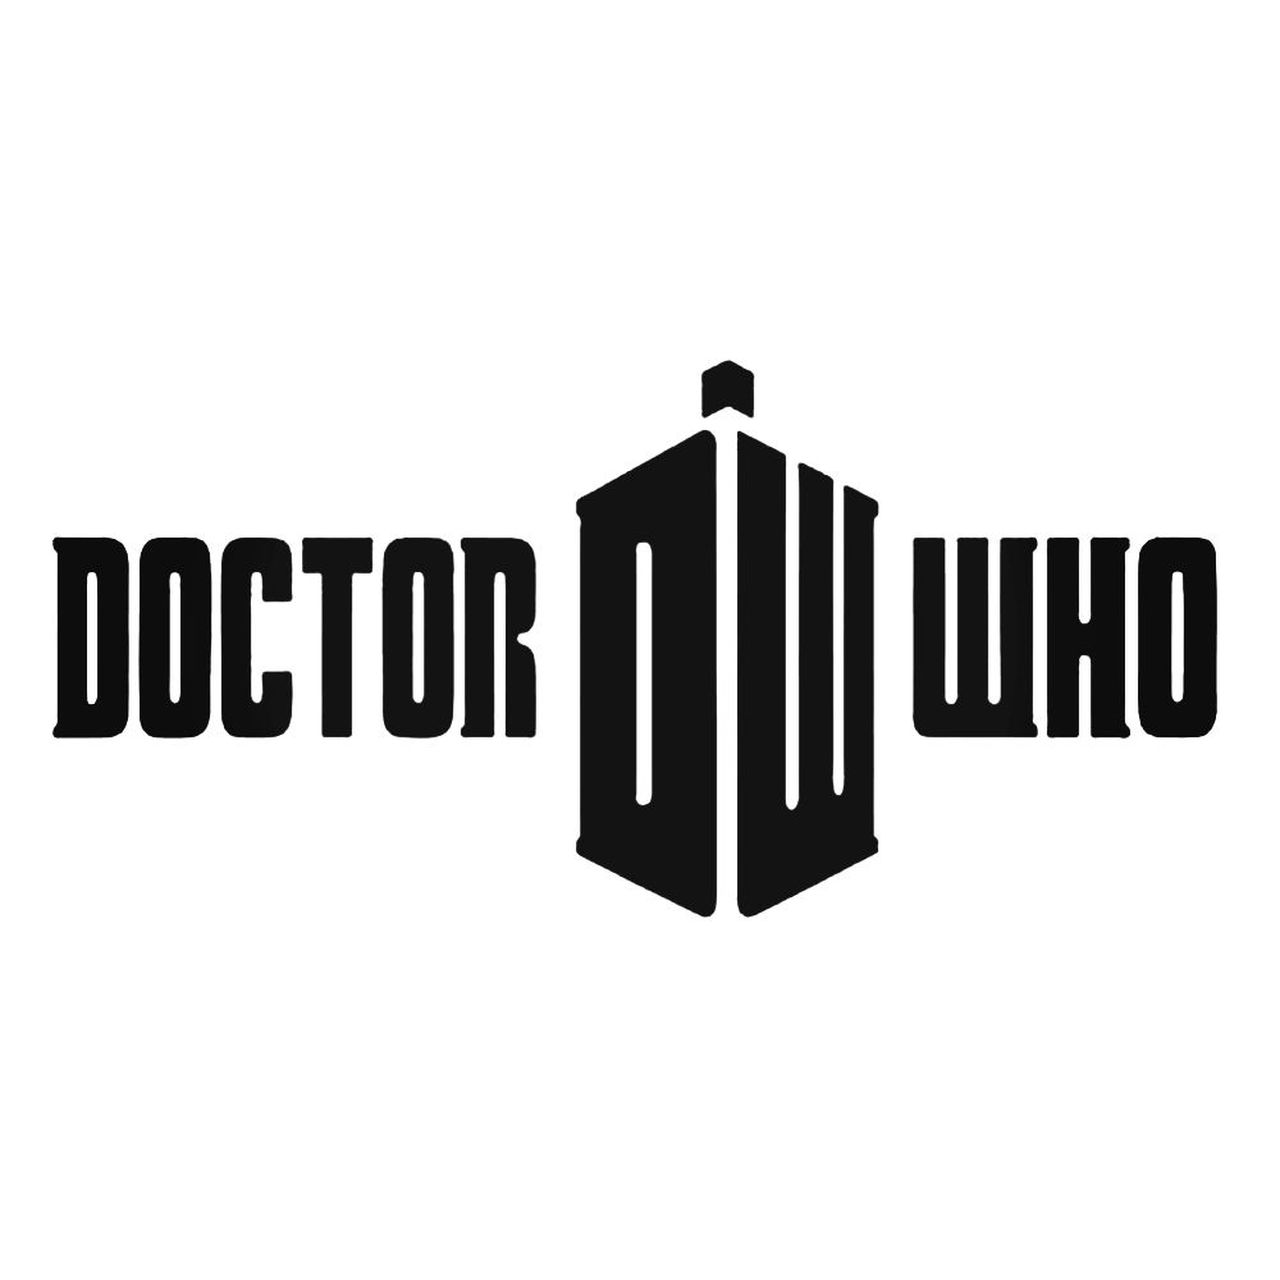 Doctor-Who-Tardis-Logo-Vinyl-Decal-Sticker_77423.1510890399.jpg